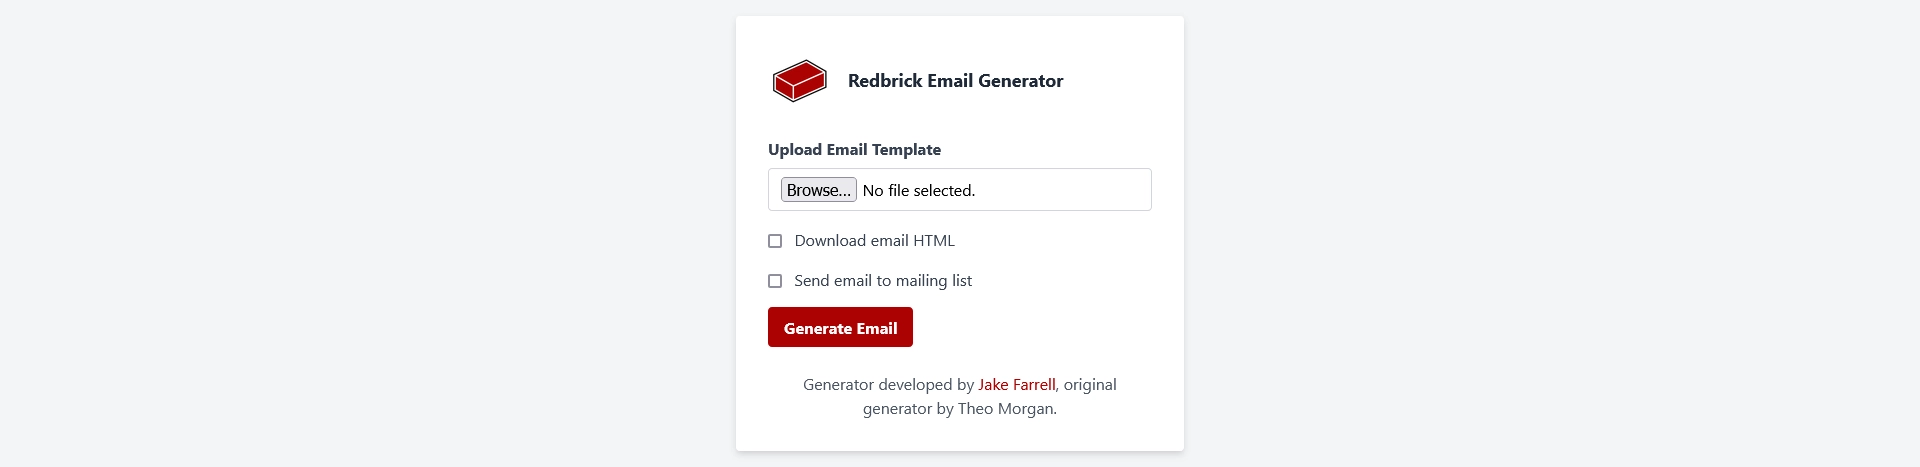 Redbrick Email Generator